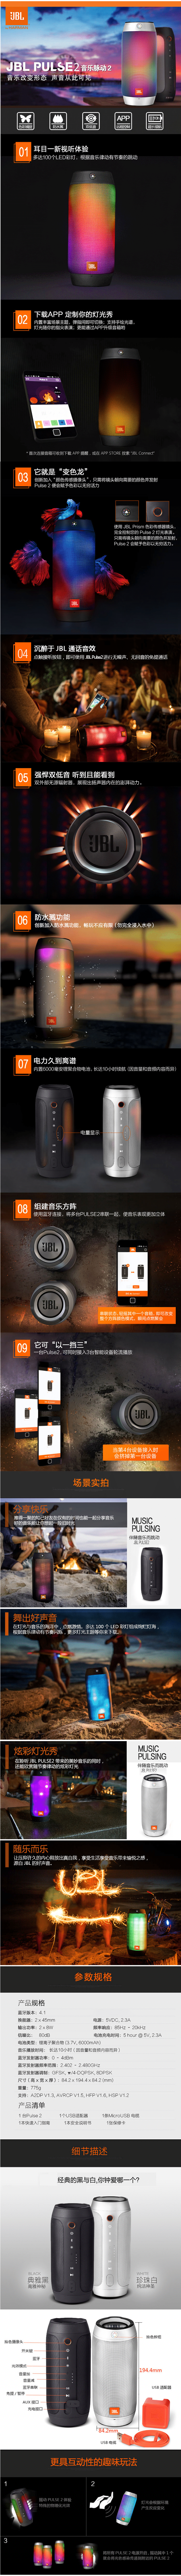 【JBLPulse 2】JBL Pulse 2 炫彩无线蓝牙小音箱 低音炮 便携迷你音响 音箱 音乐 (1).png